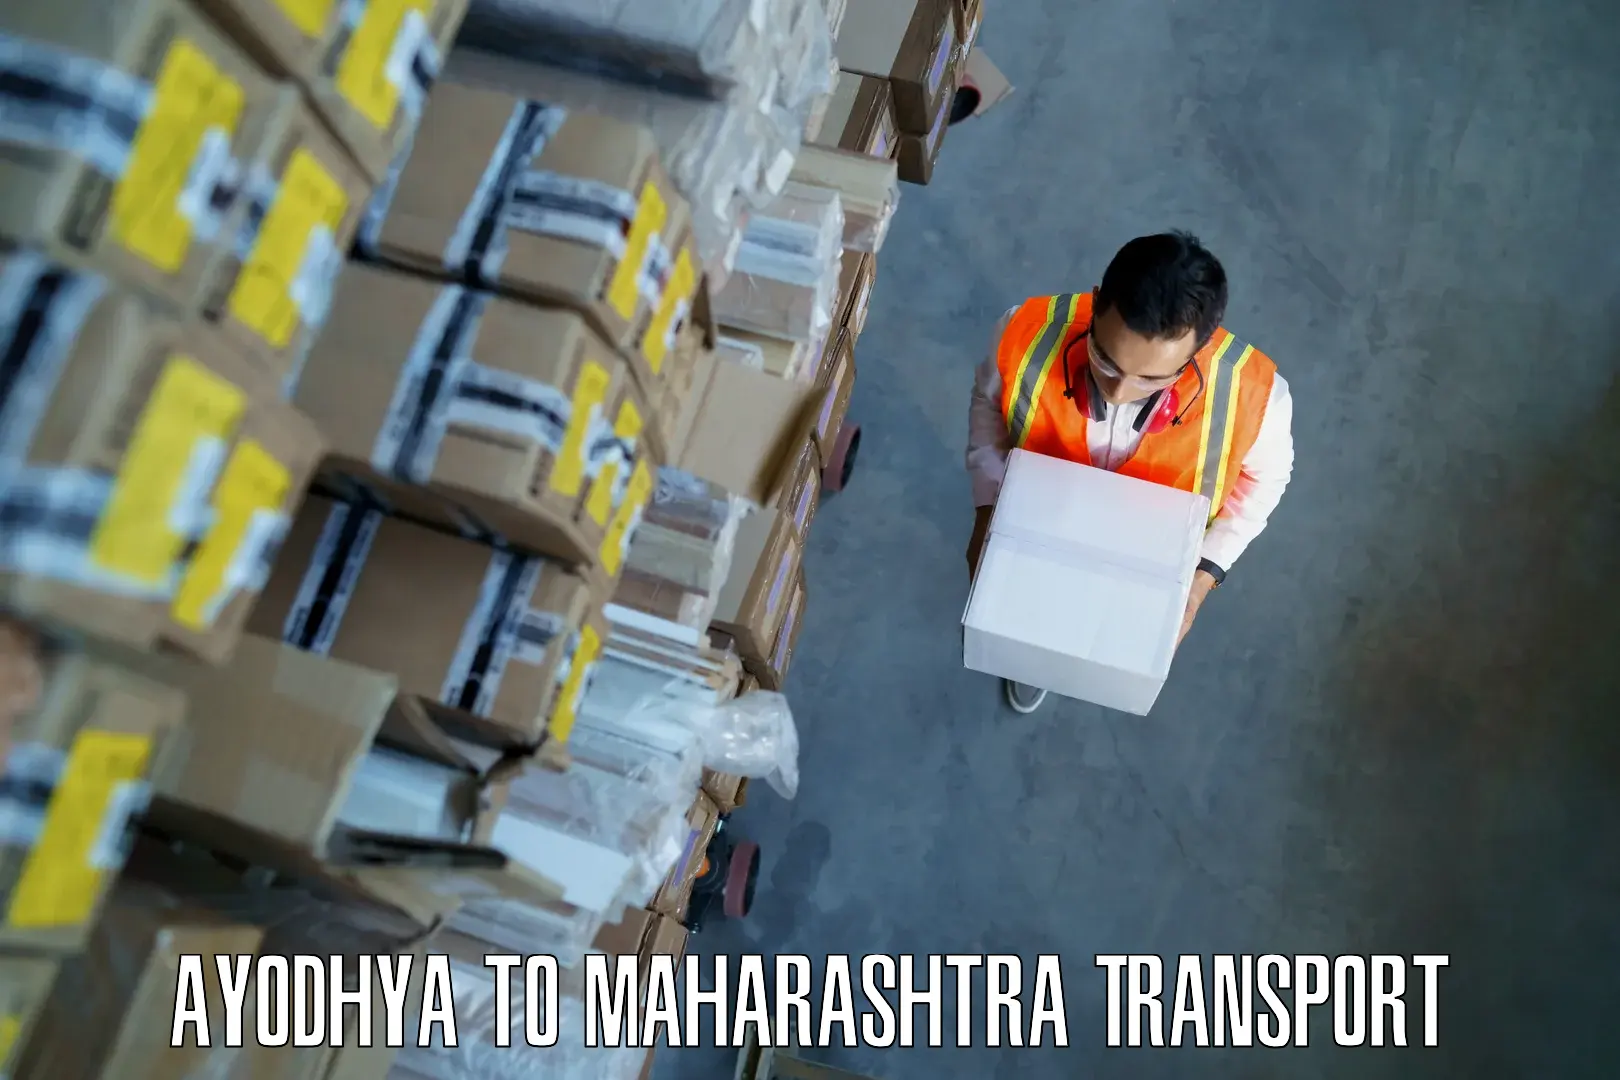 Truck transport companies in India Ayodhya to Amravati